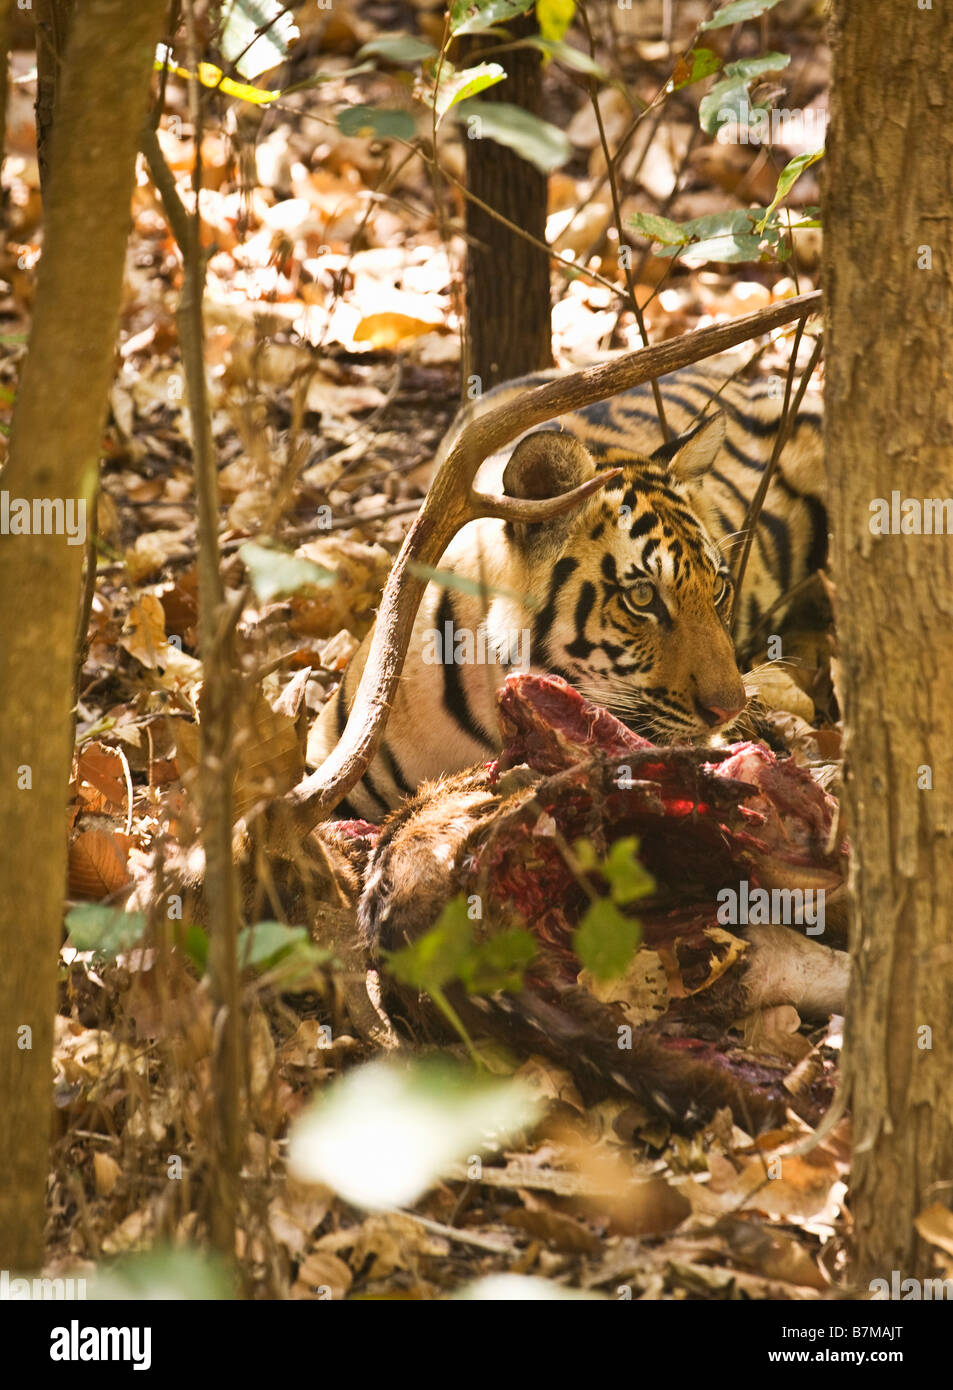 El Tigre de Bengala real comer ciervos axis o Chital Eje el eje de Kanha Parque Nacional Forestal de Madhya Pradesh, India Septentrional Asia Foto de stock